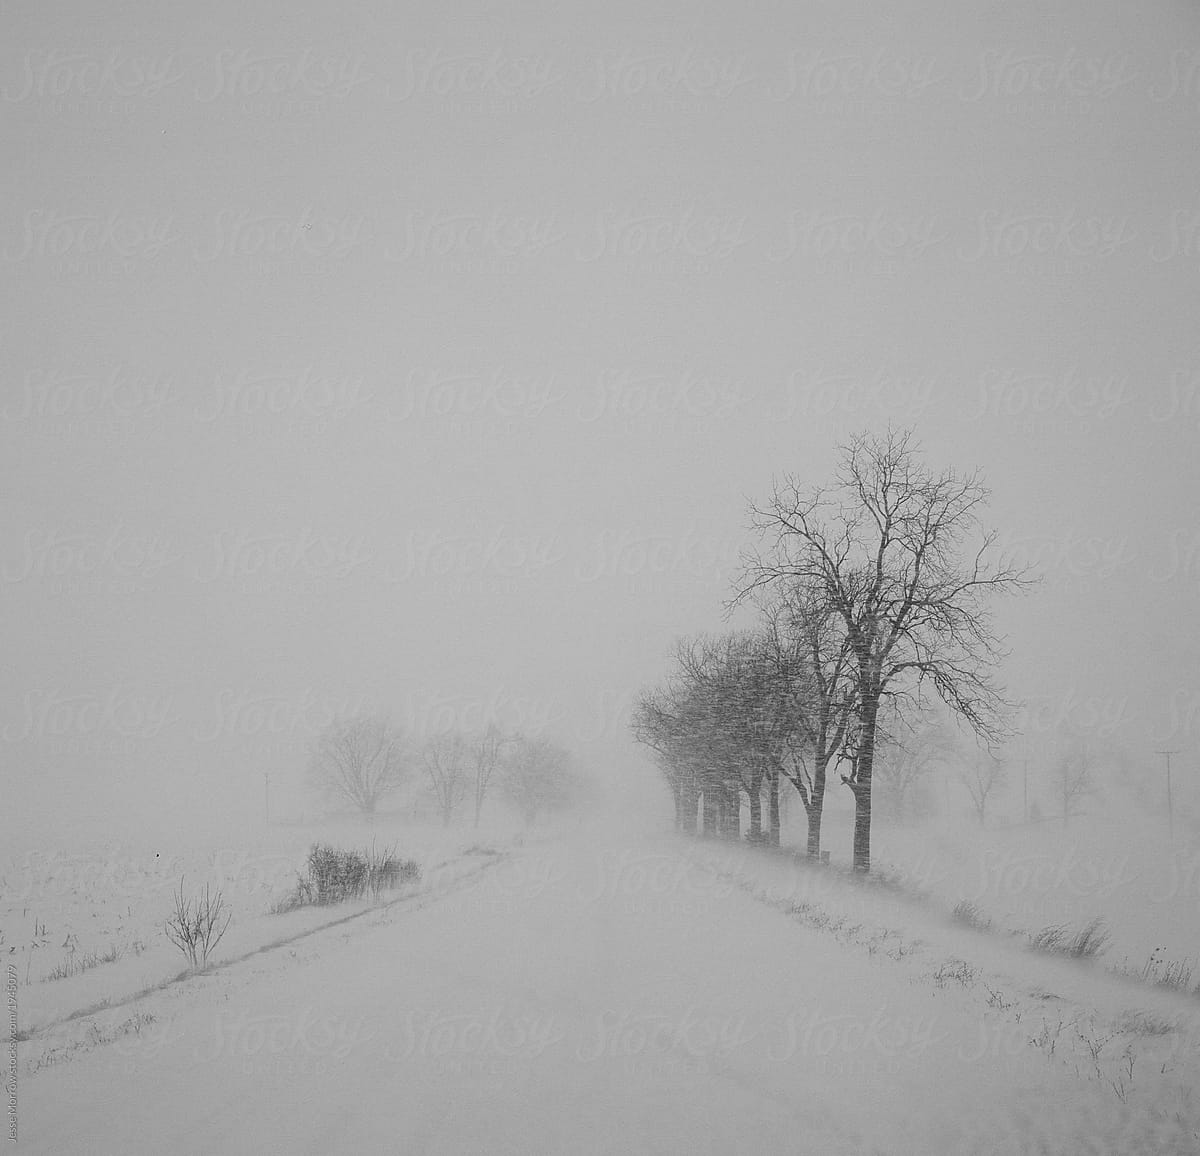 Frozen winter snow storm in Michigan country roads medium format film